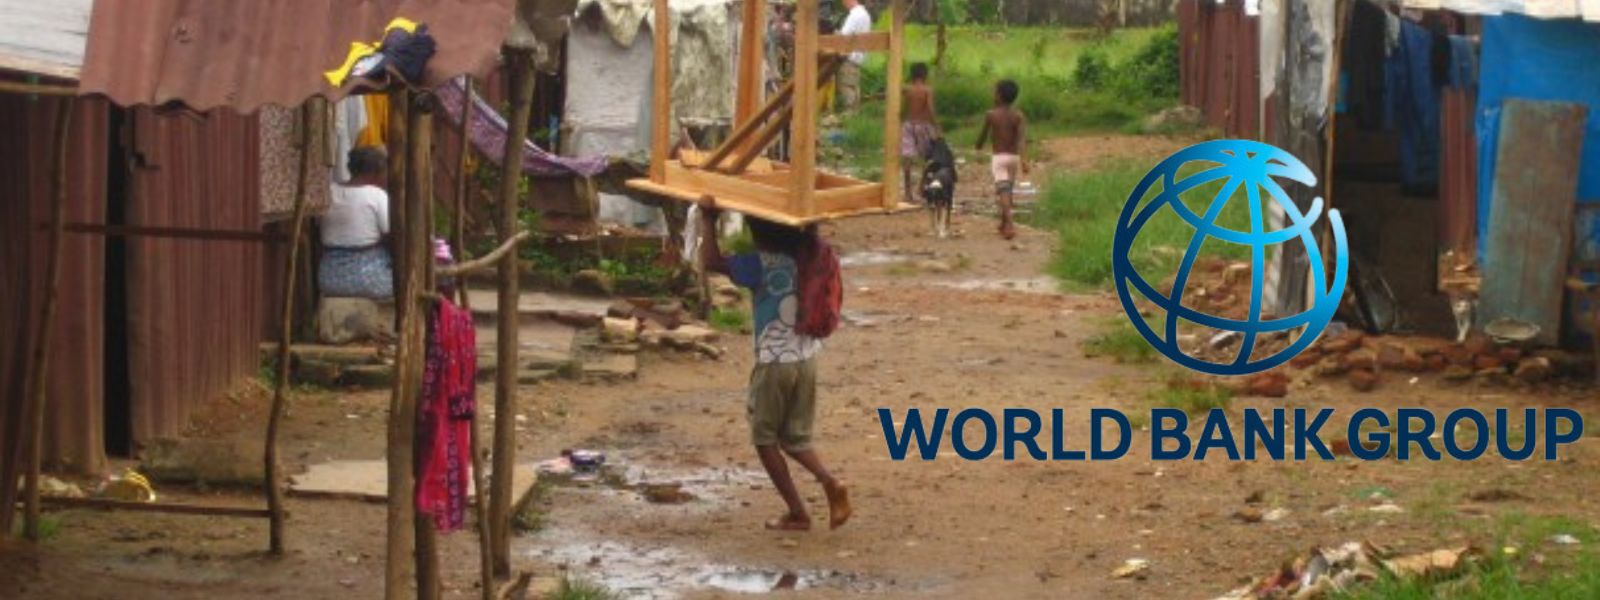 Sri Lanka's poverty rate has doubled - World Bank